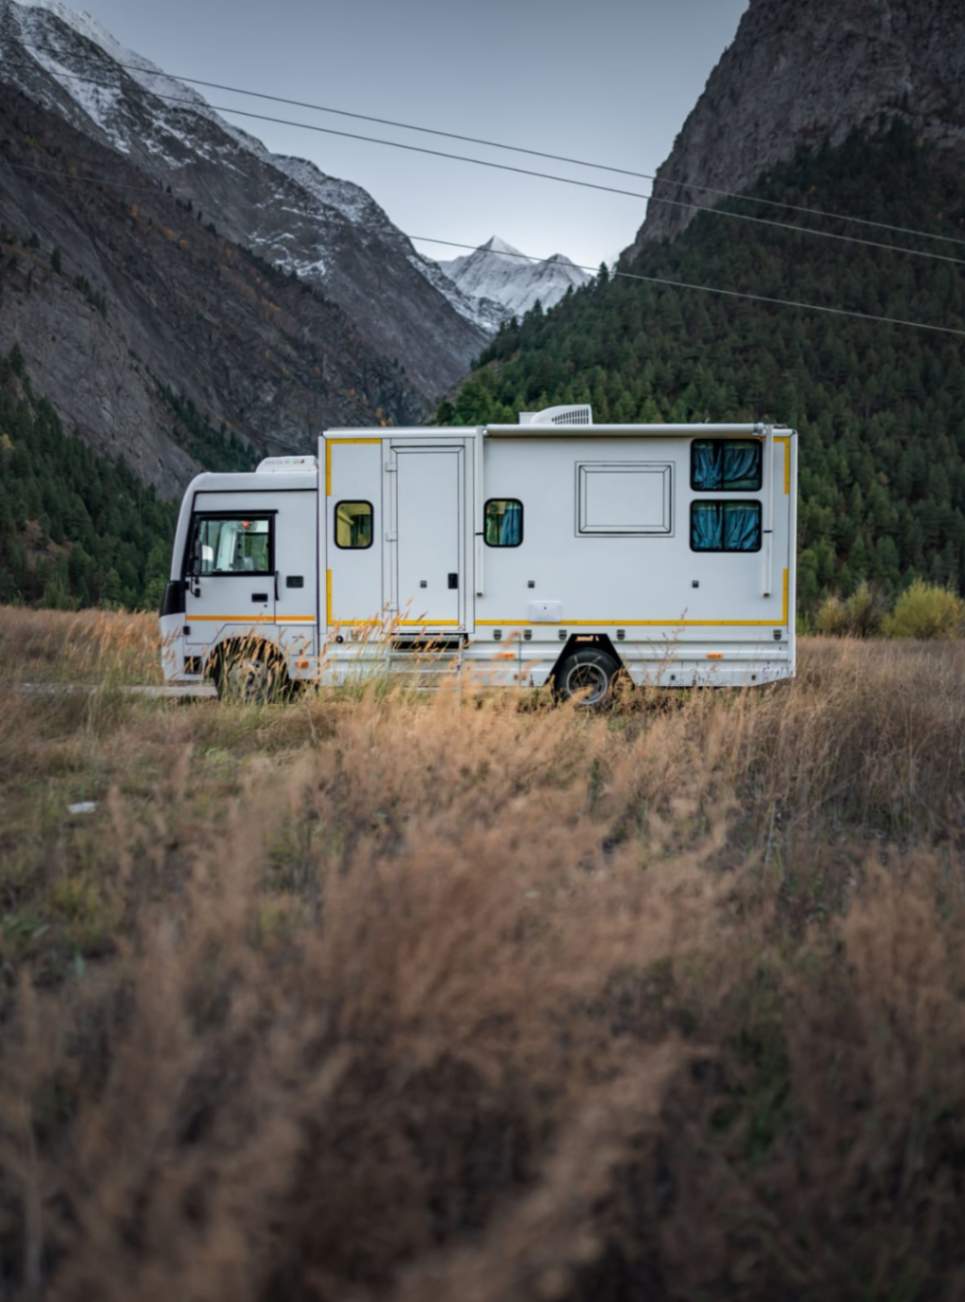 Caravan in mountains